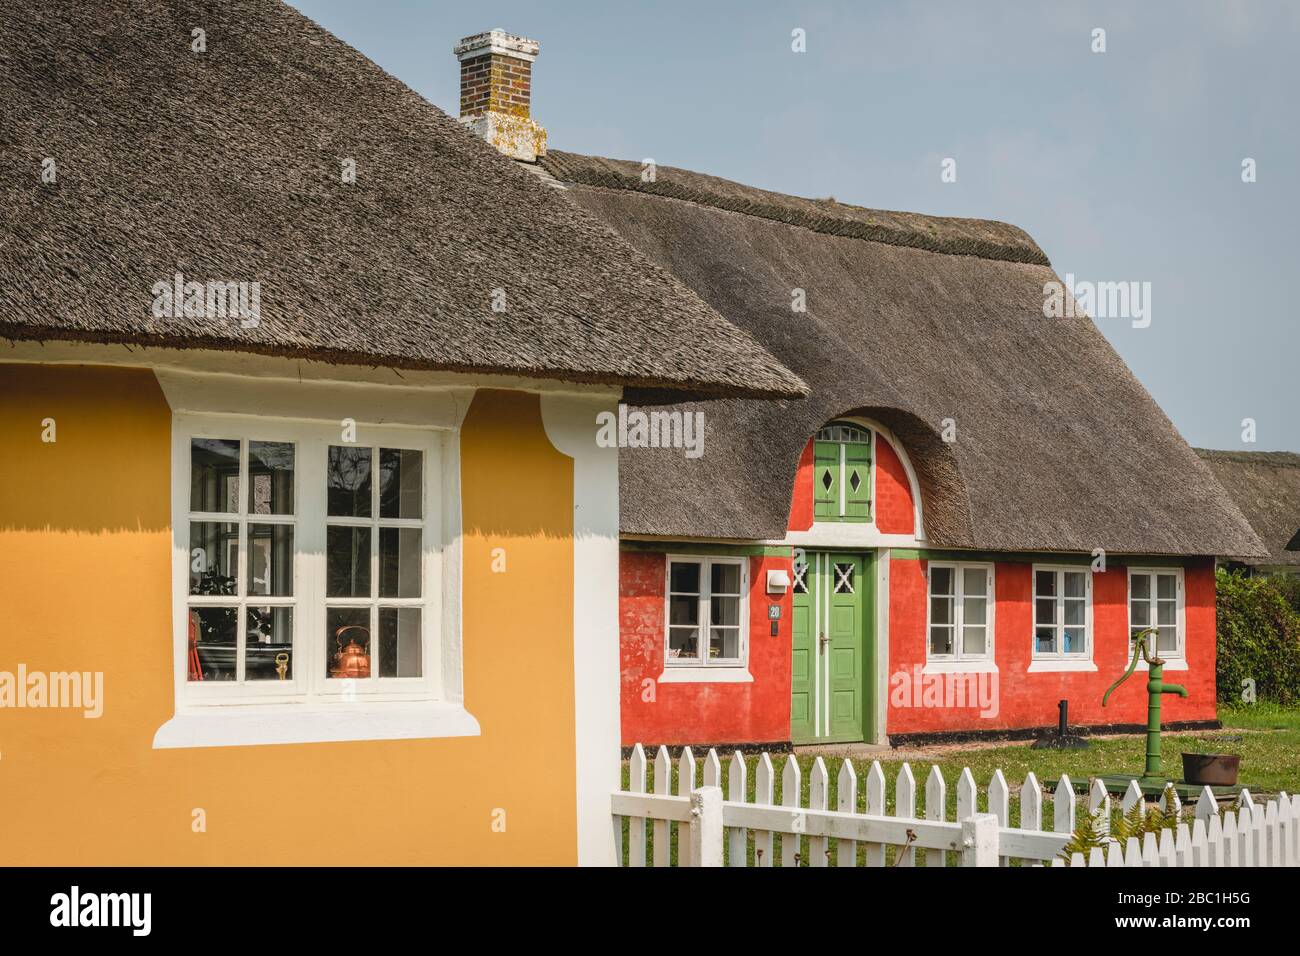 Dänemark, Sonderho, zwei farbenfrohe rustikale Häuser mit Strohdächern Stockfoto